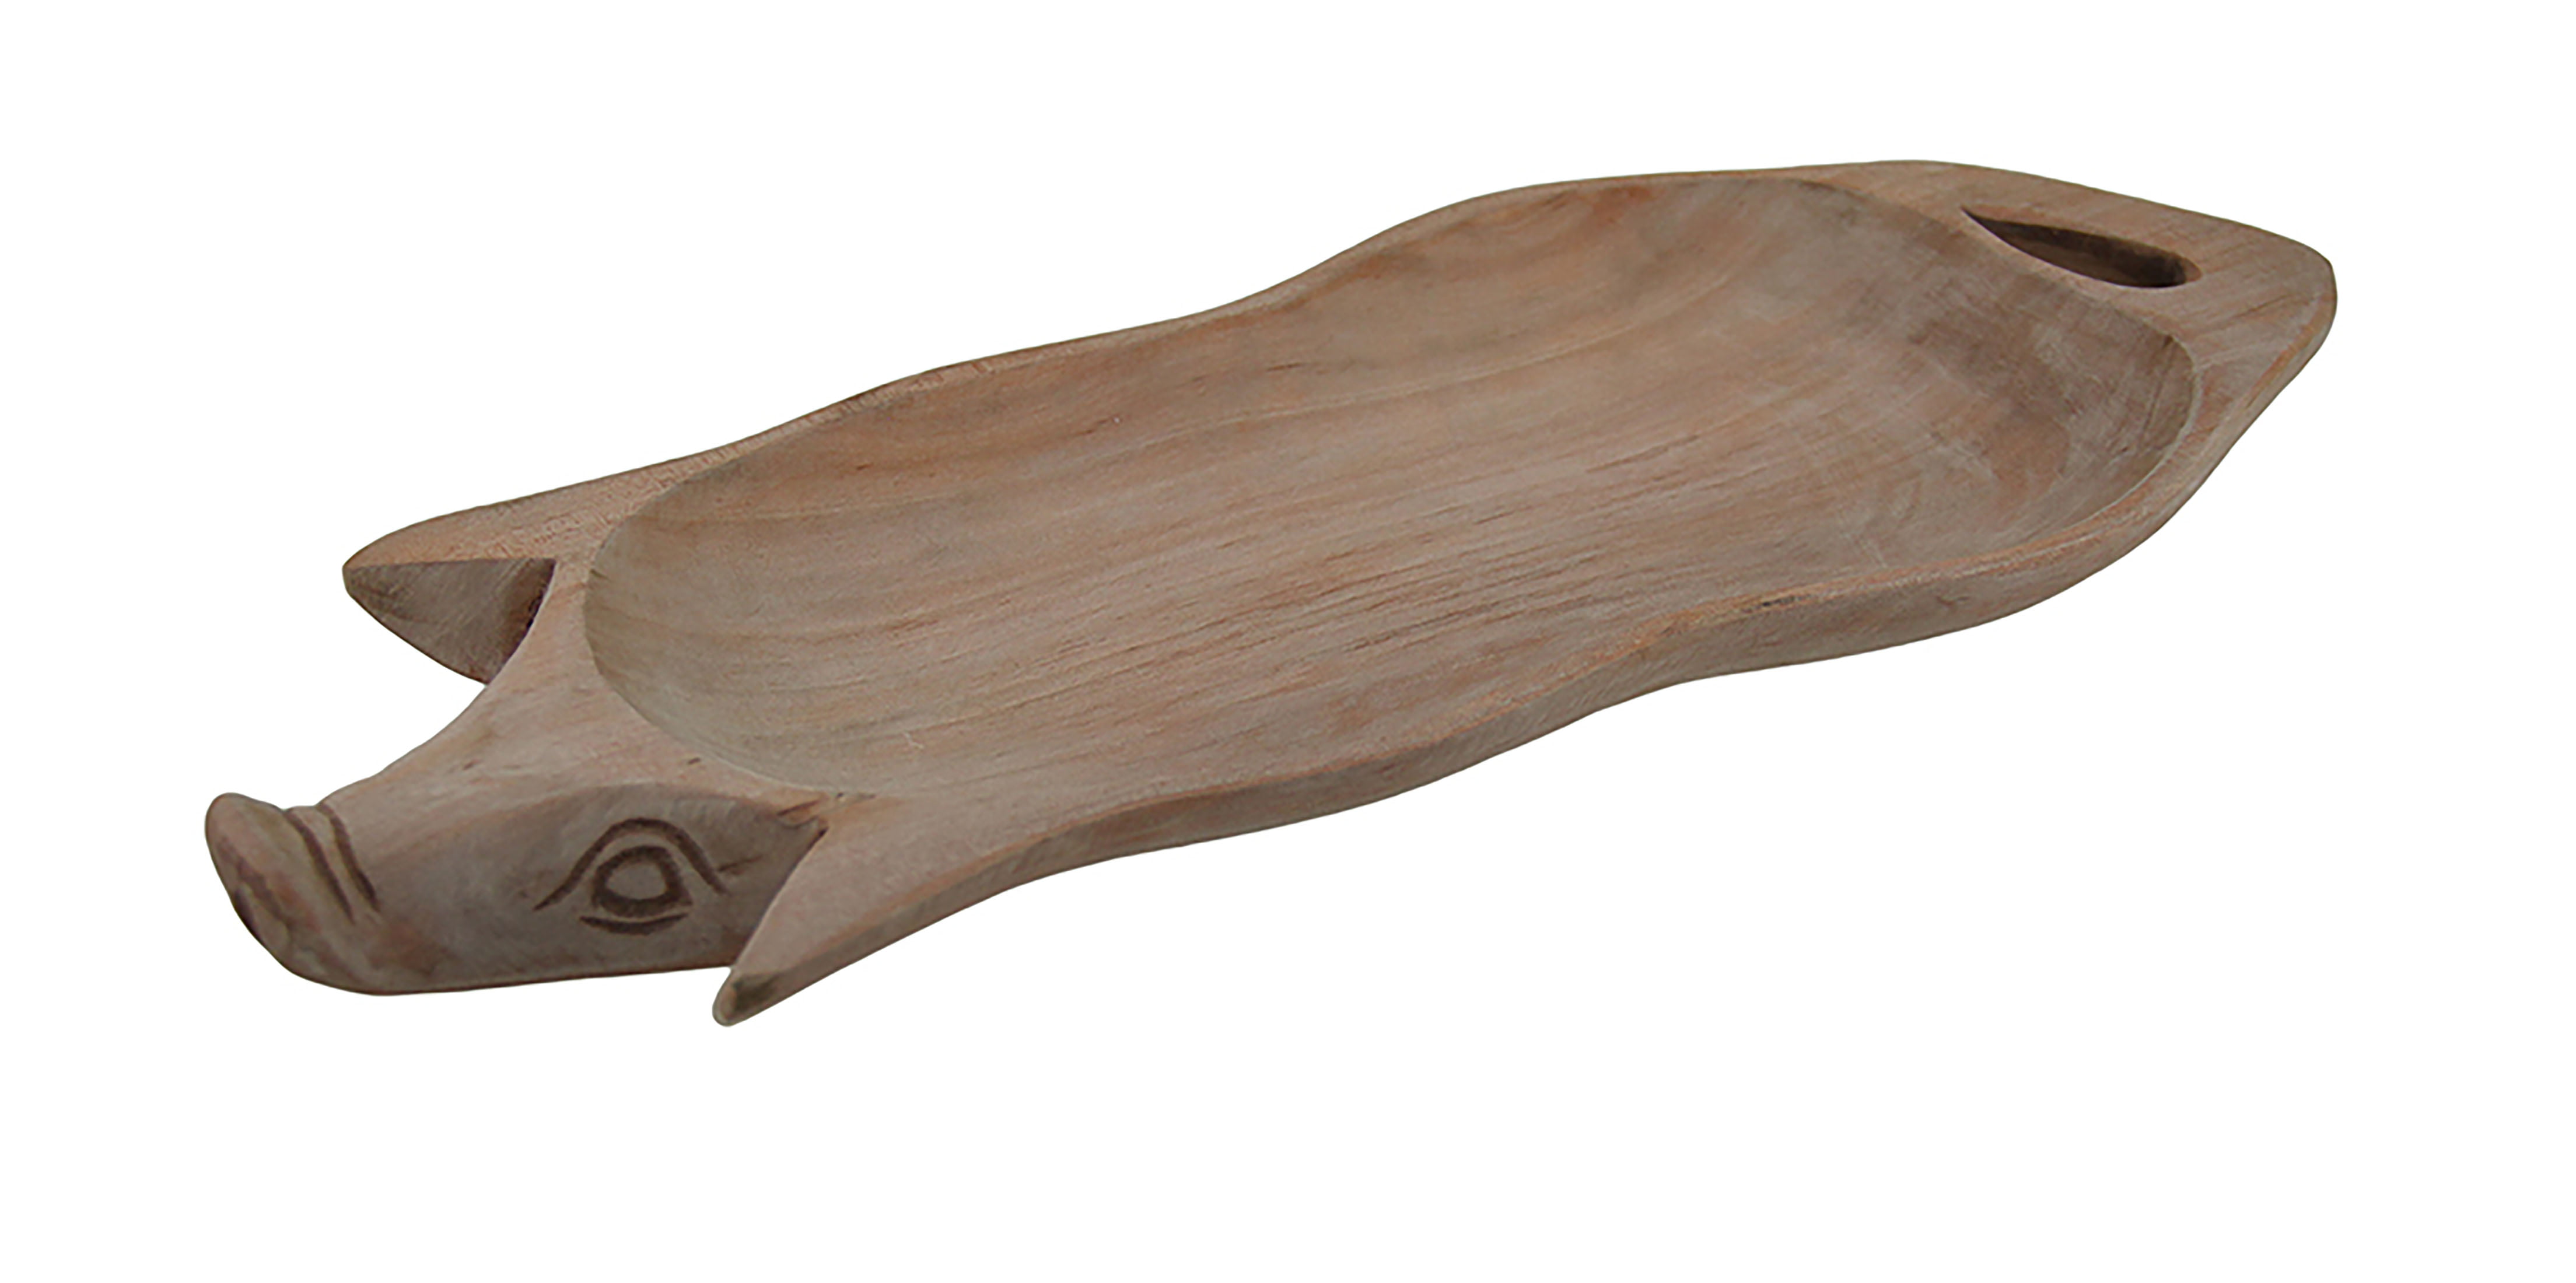 ANTIQUE WOODEN BOWL Fish Shaped Rare Mango Wood Primitive Rustic Decor Collect#2 